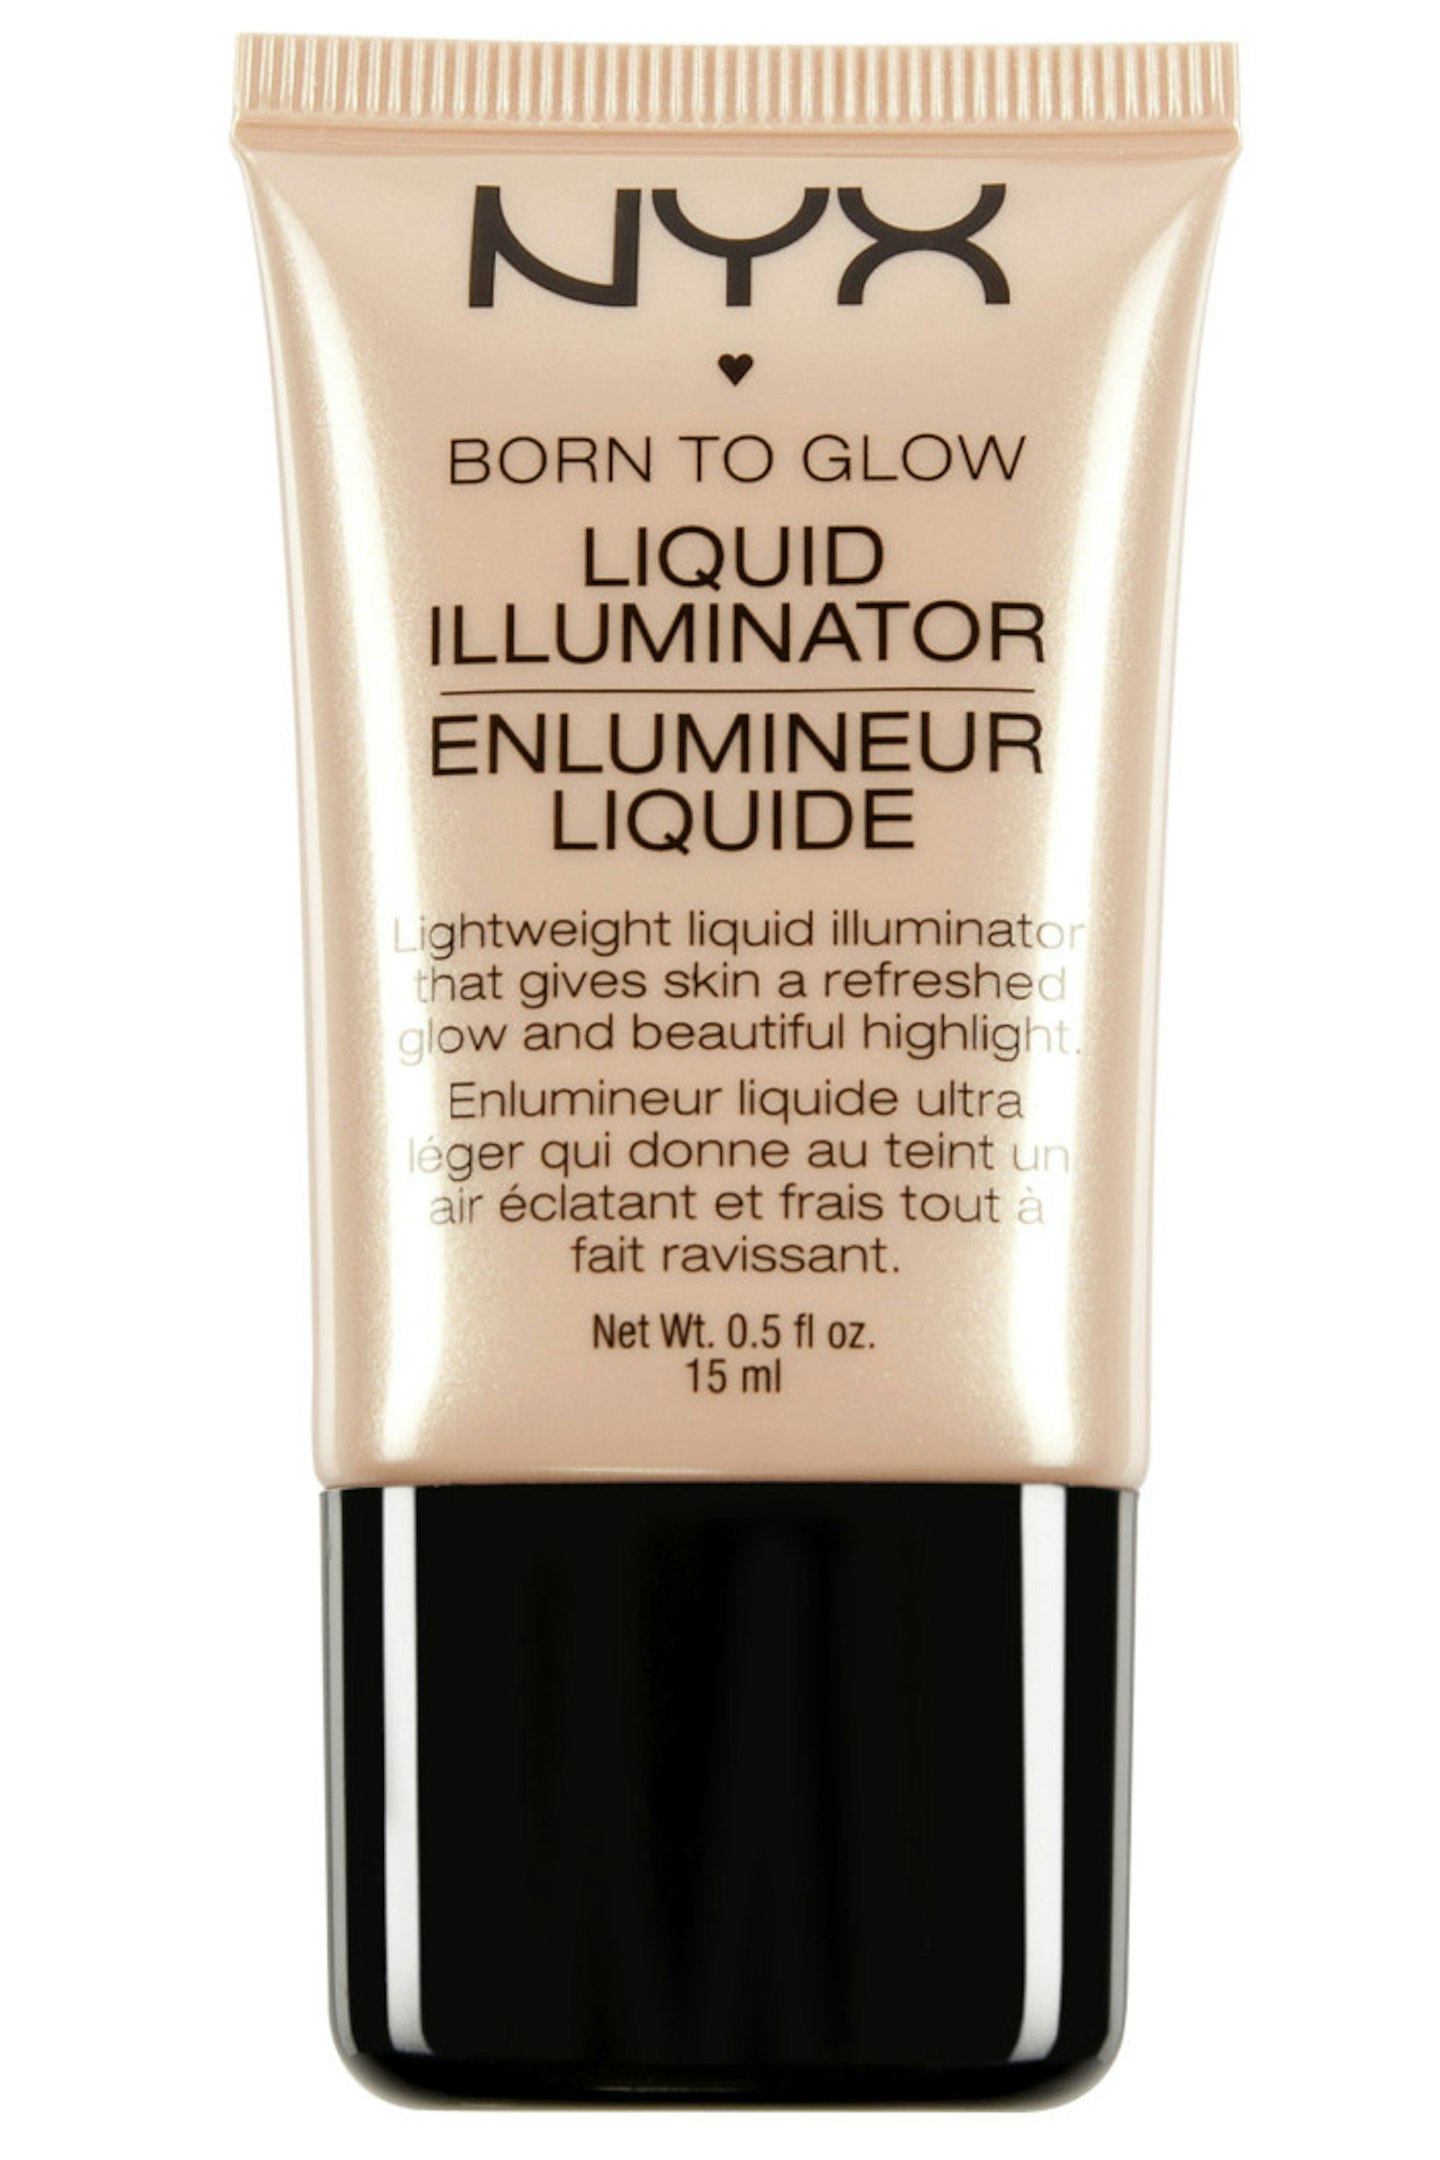 NYX Born To Glow Liquid Illuminator, £7.00